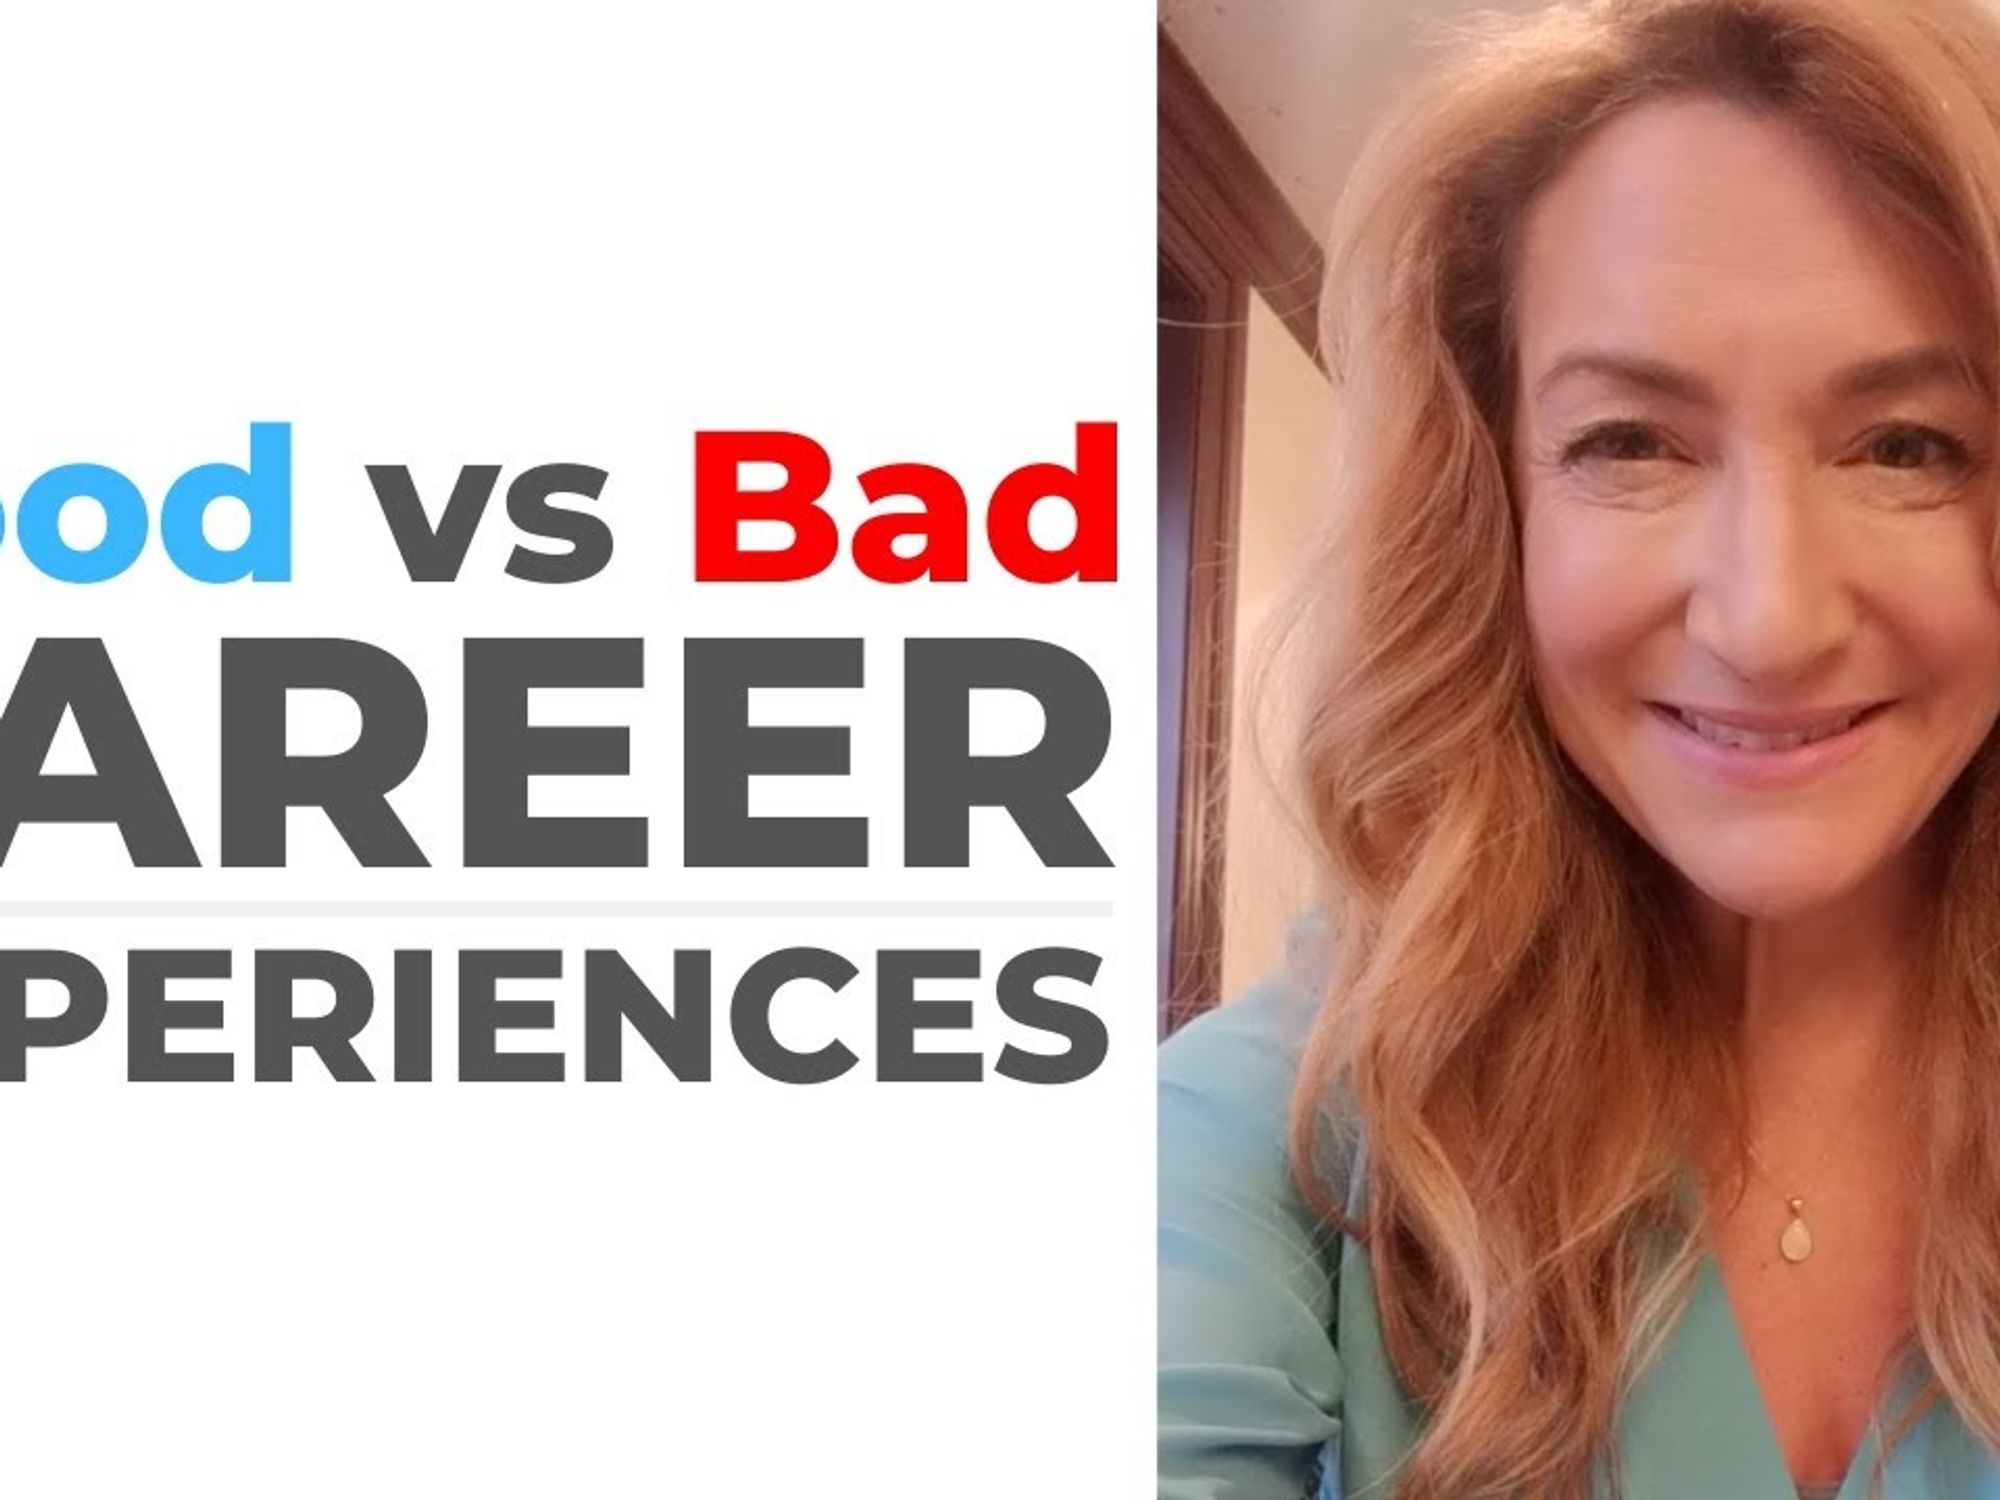 Good VS Bad Career Experiences